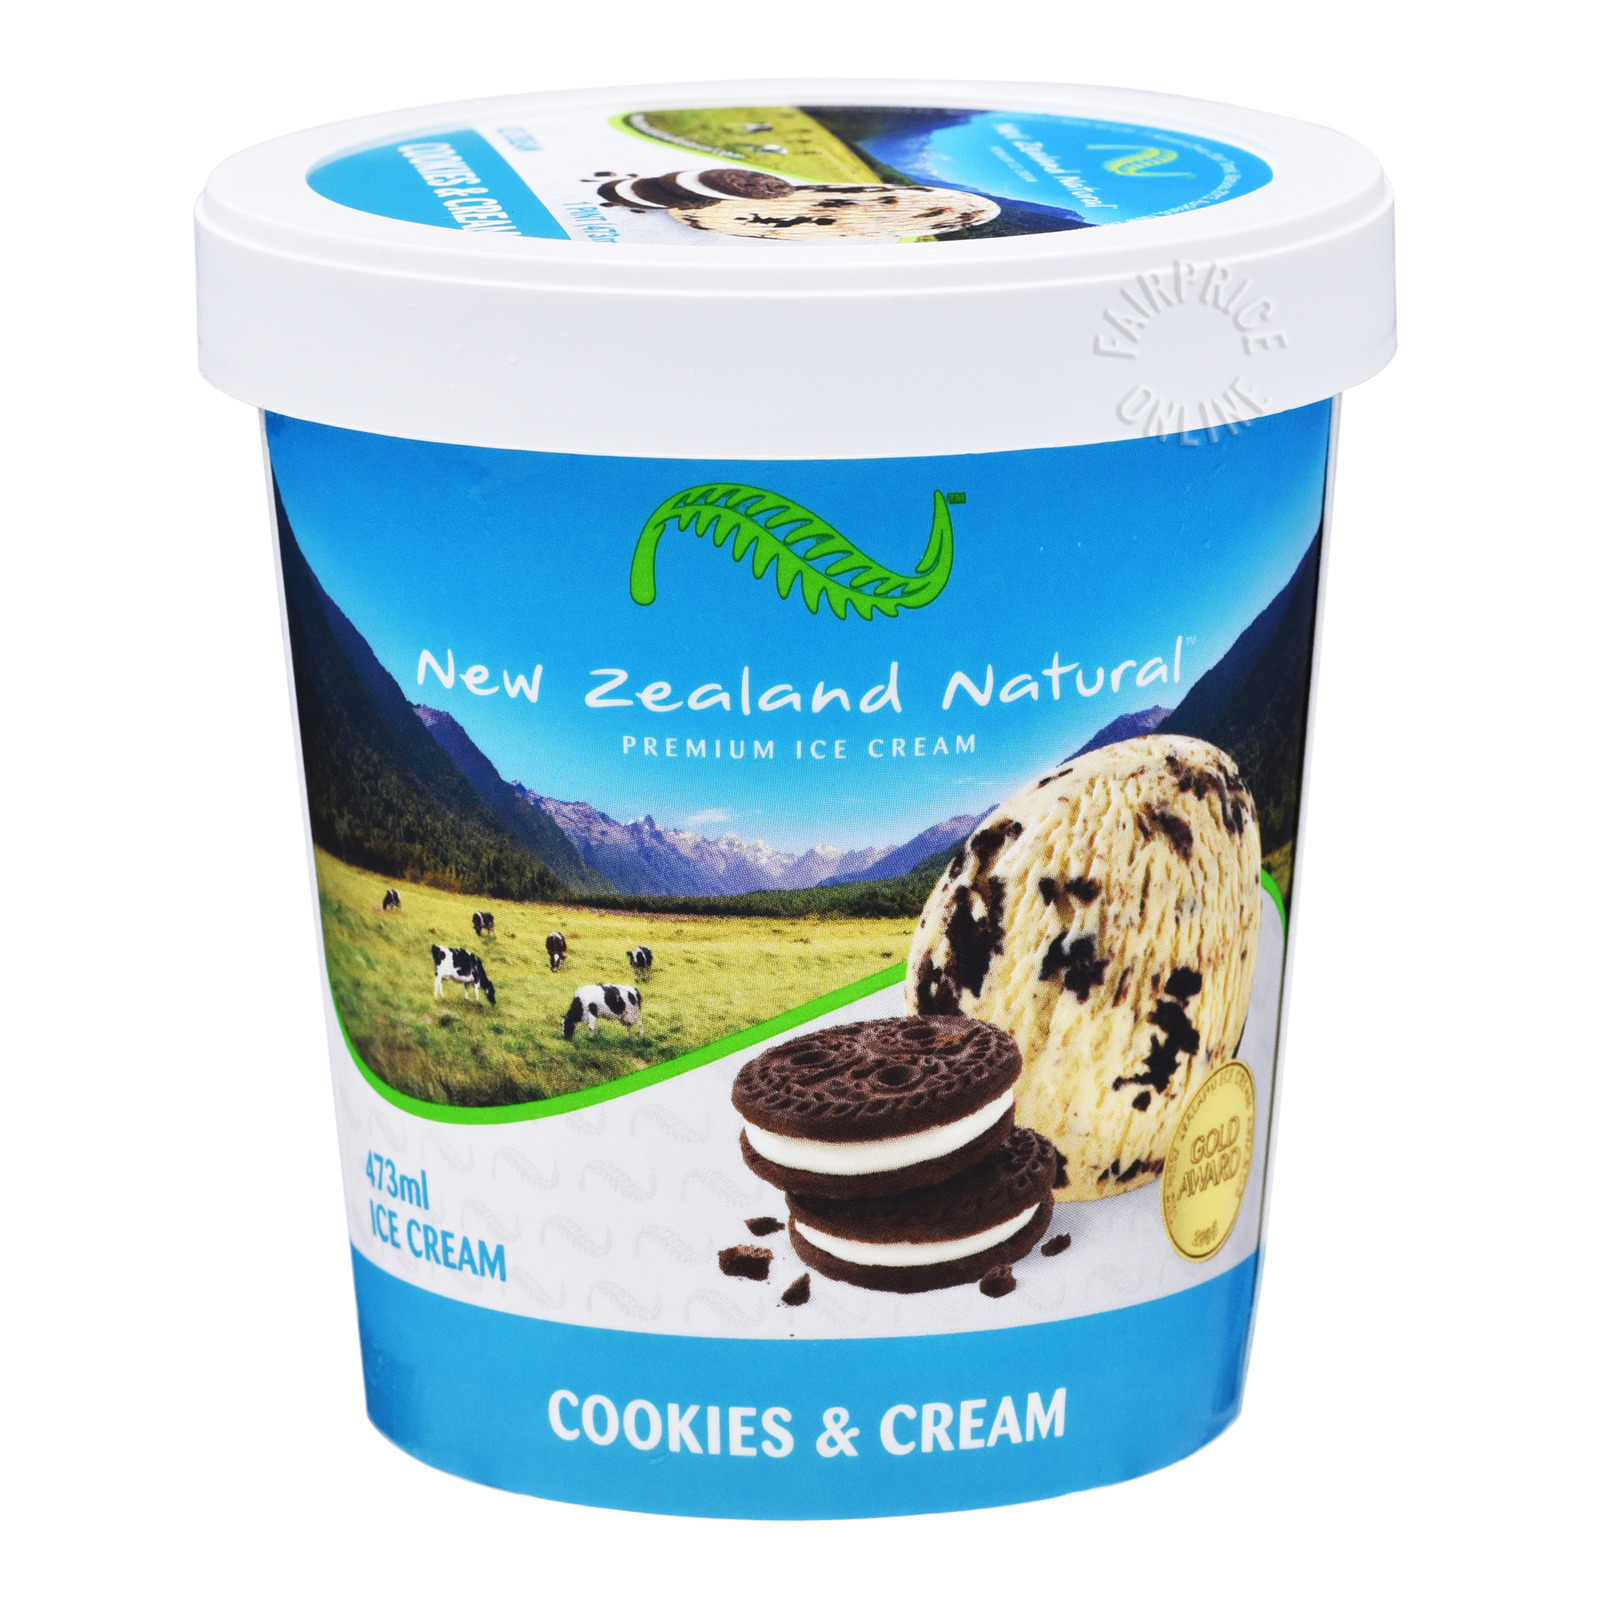 New Zealand Natural Premiun Ice Cream - Cookies & Cream